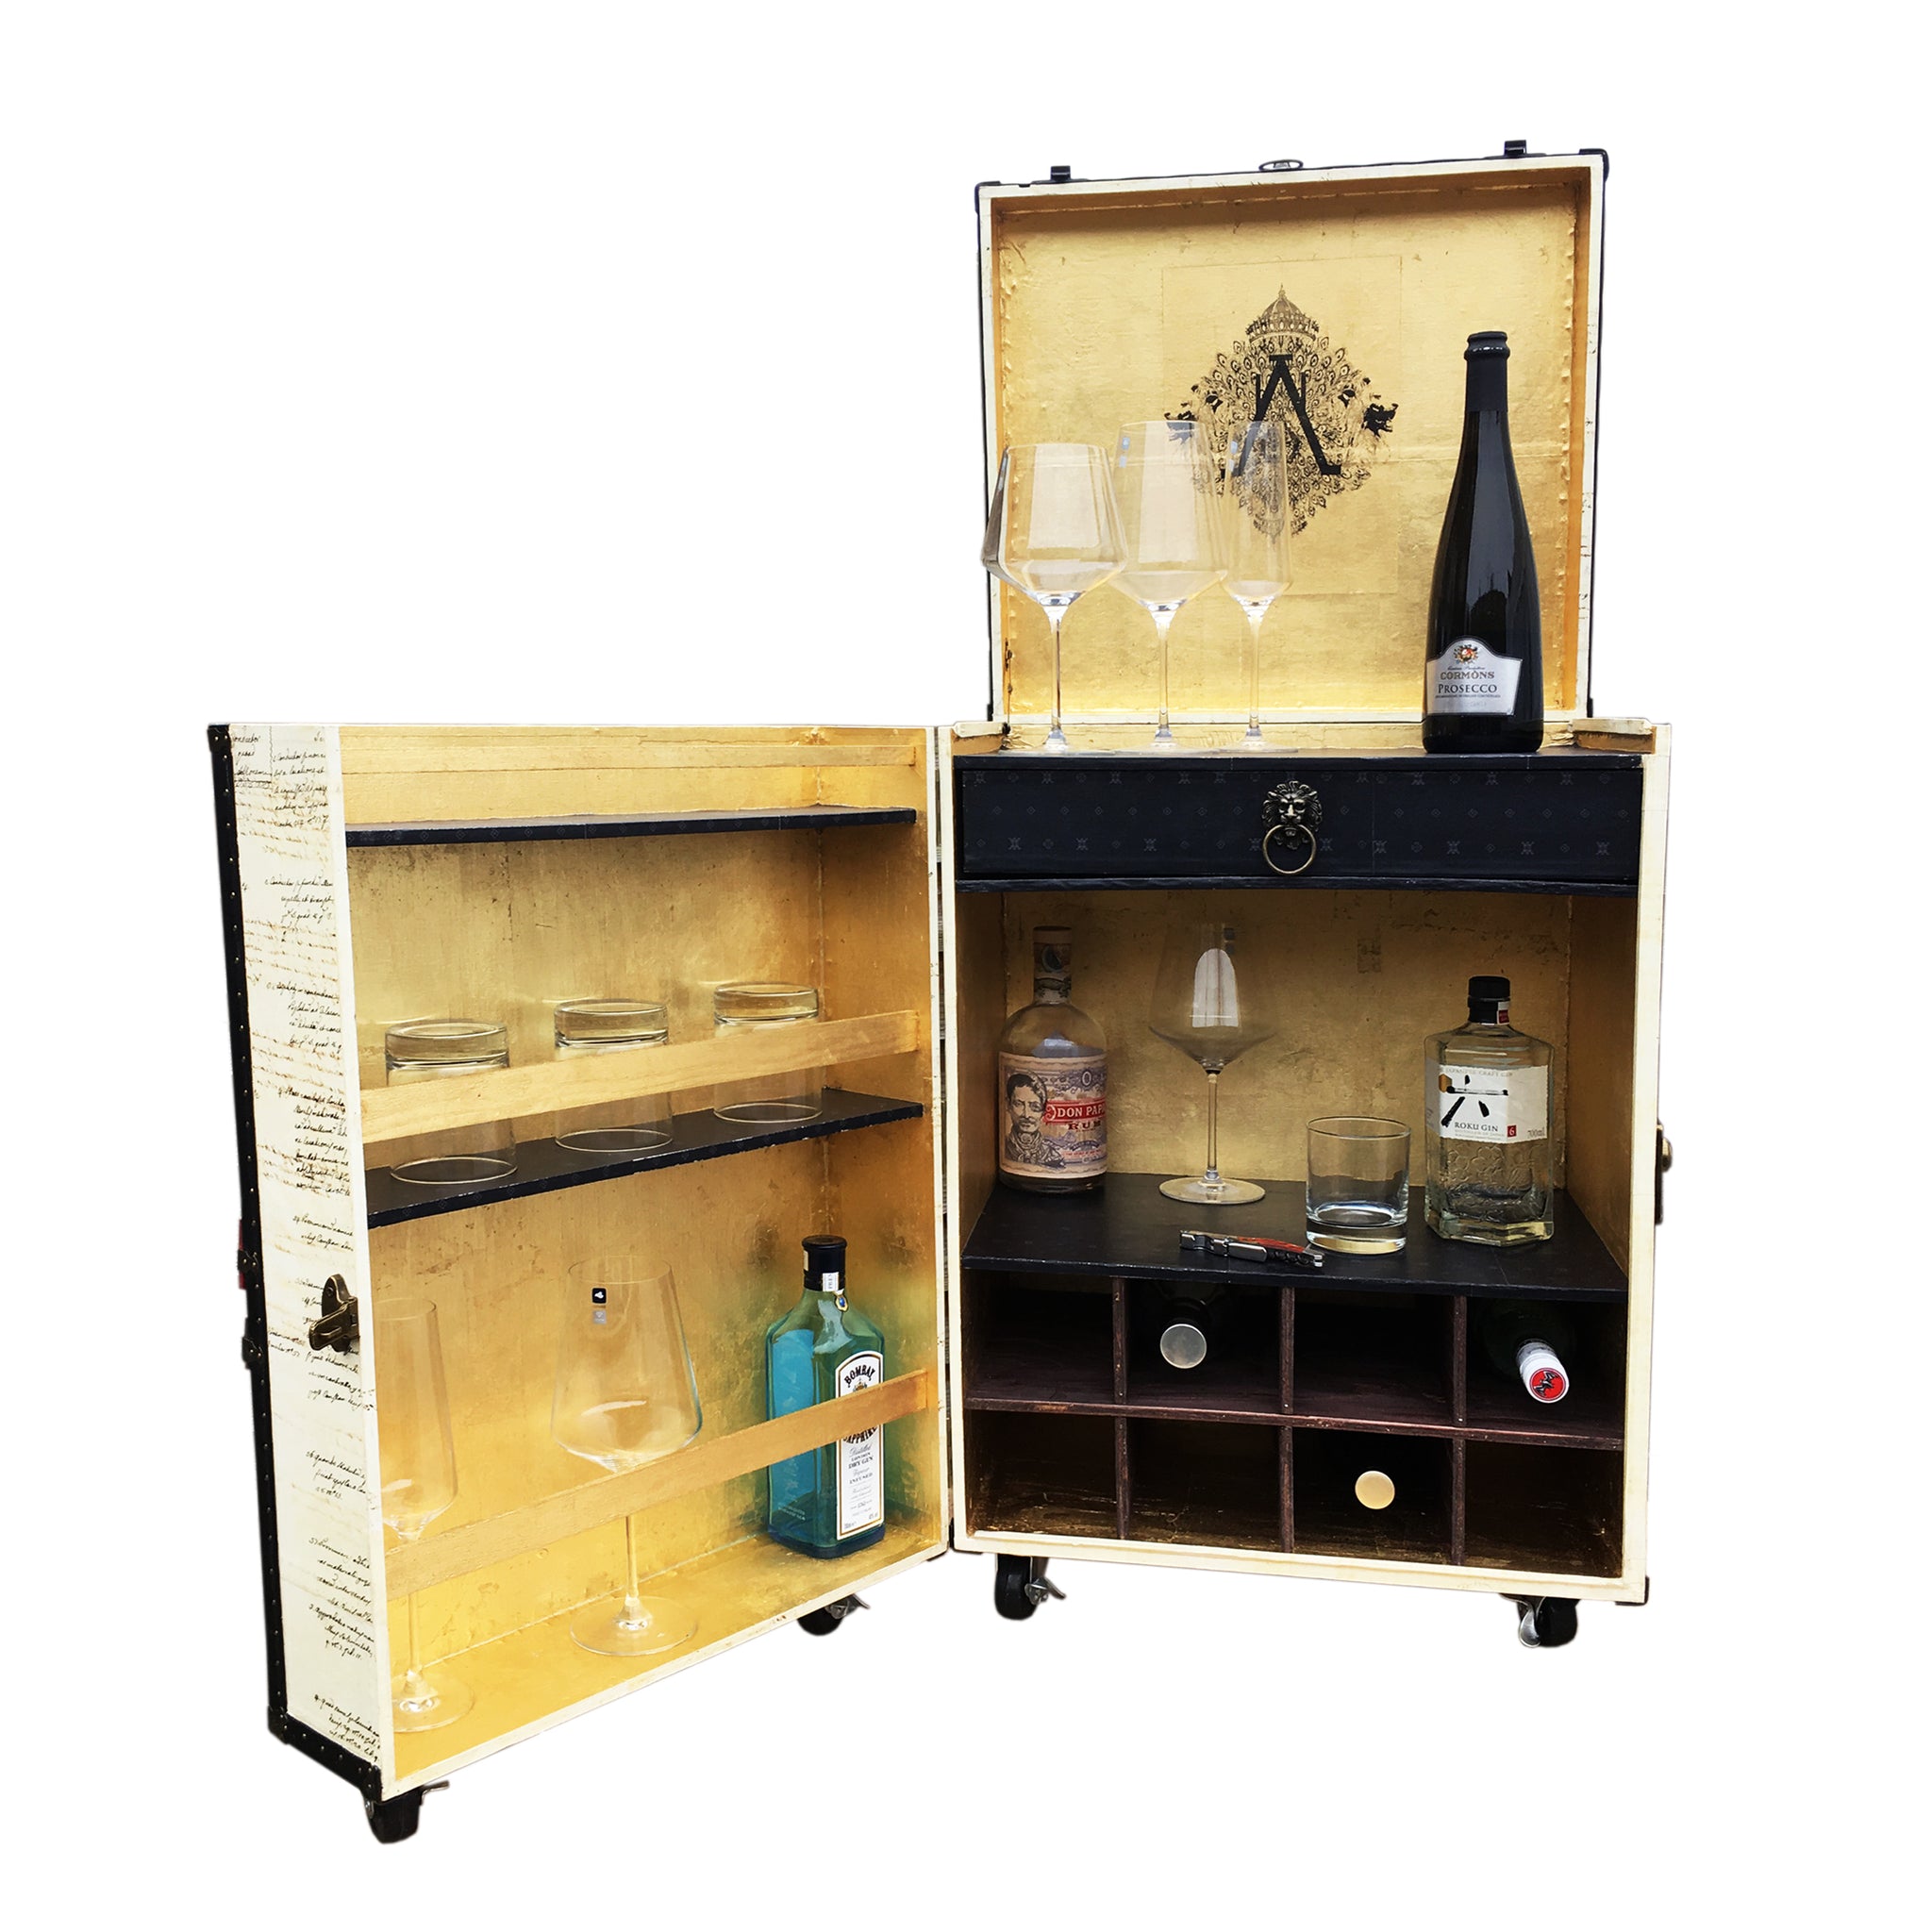 Unique Liquor Wine or Cocktail Cabinet Steamer Trunk Furniture 